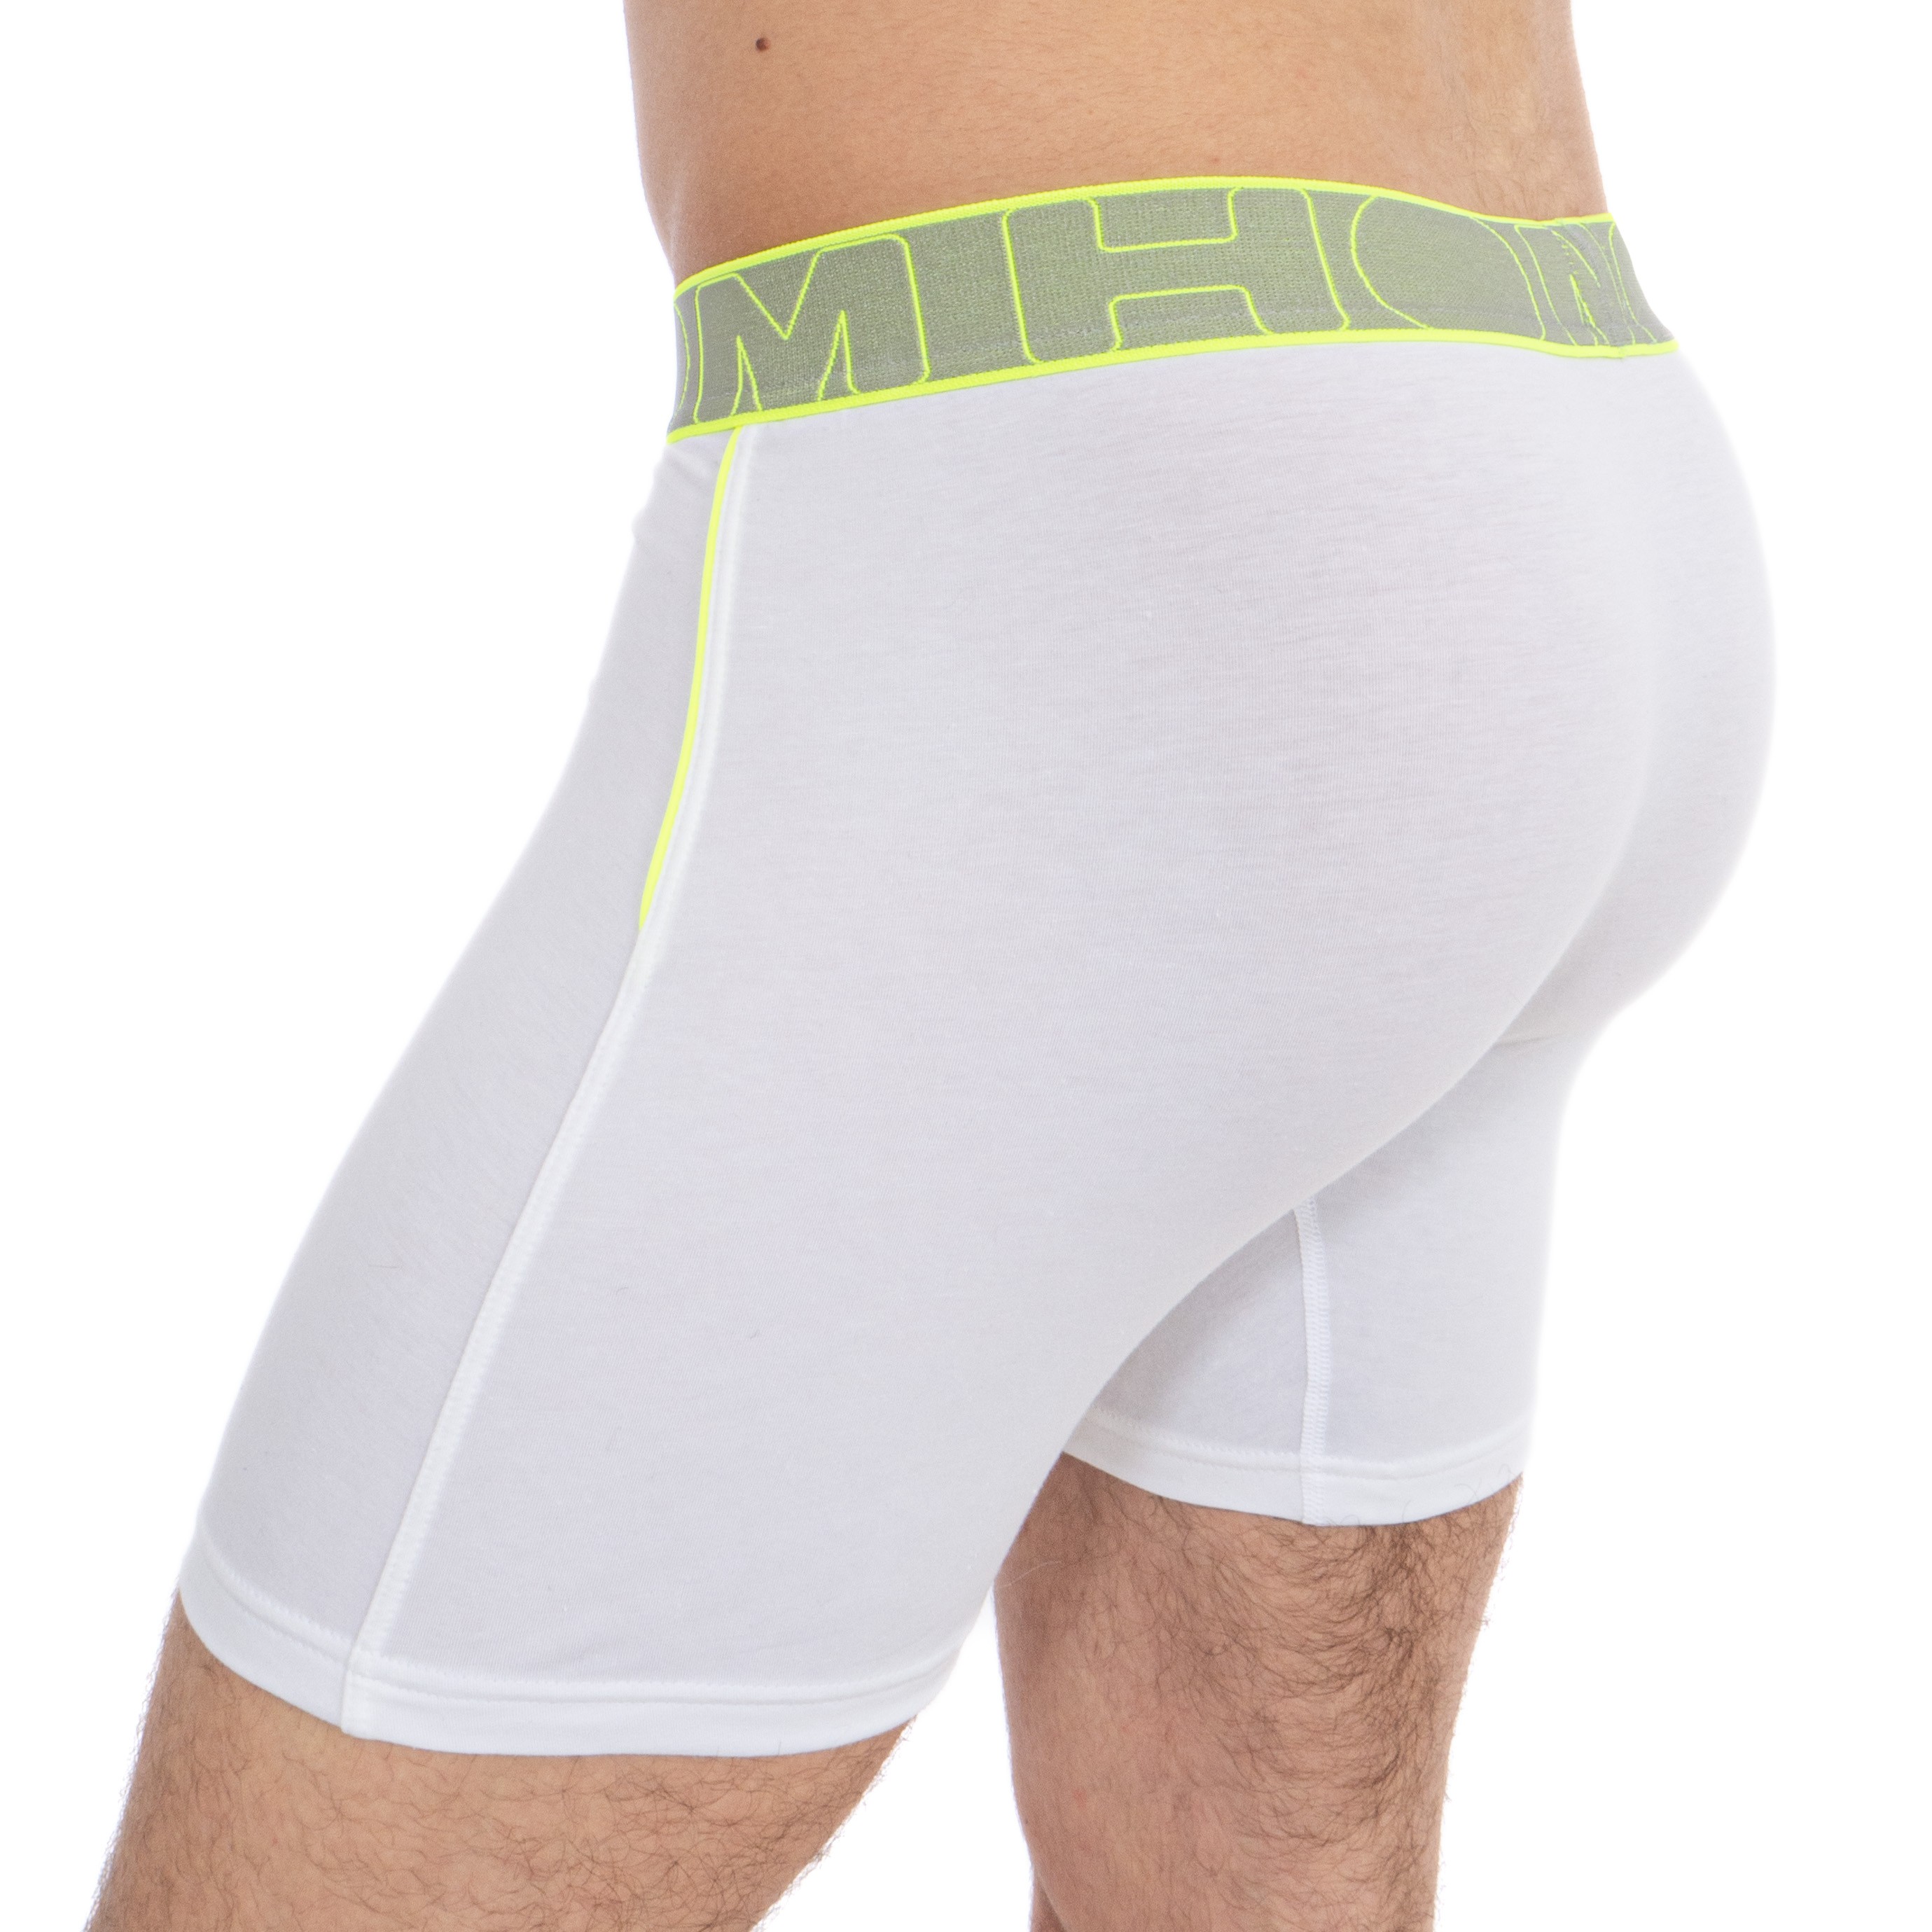 Boxer long Athletics - white: Underwear for man brand HOM for sale